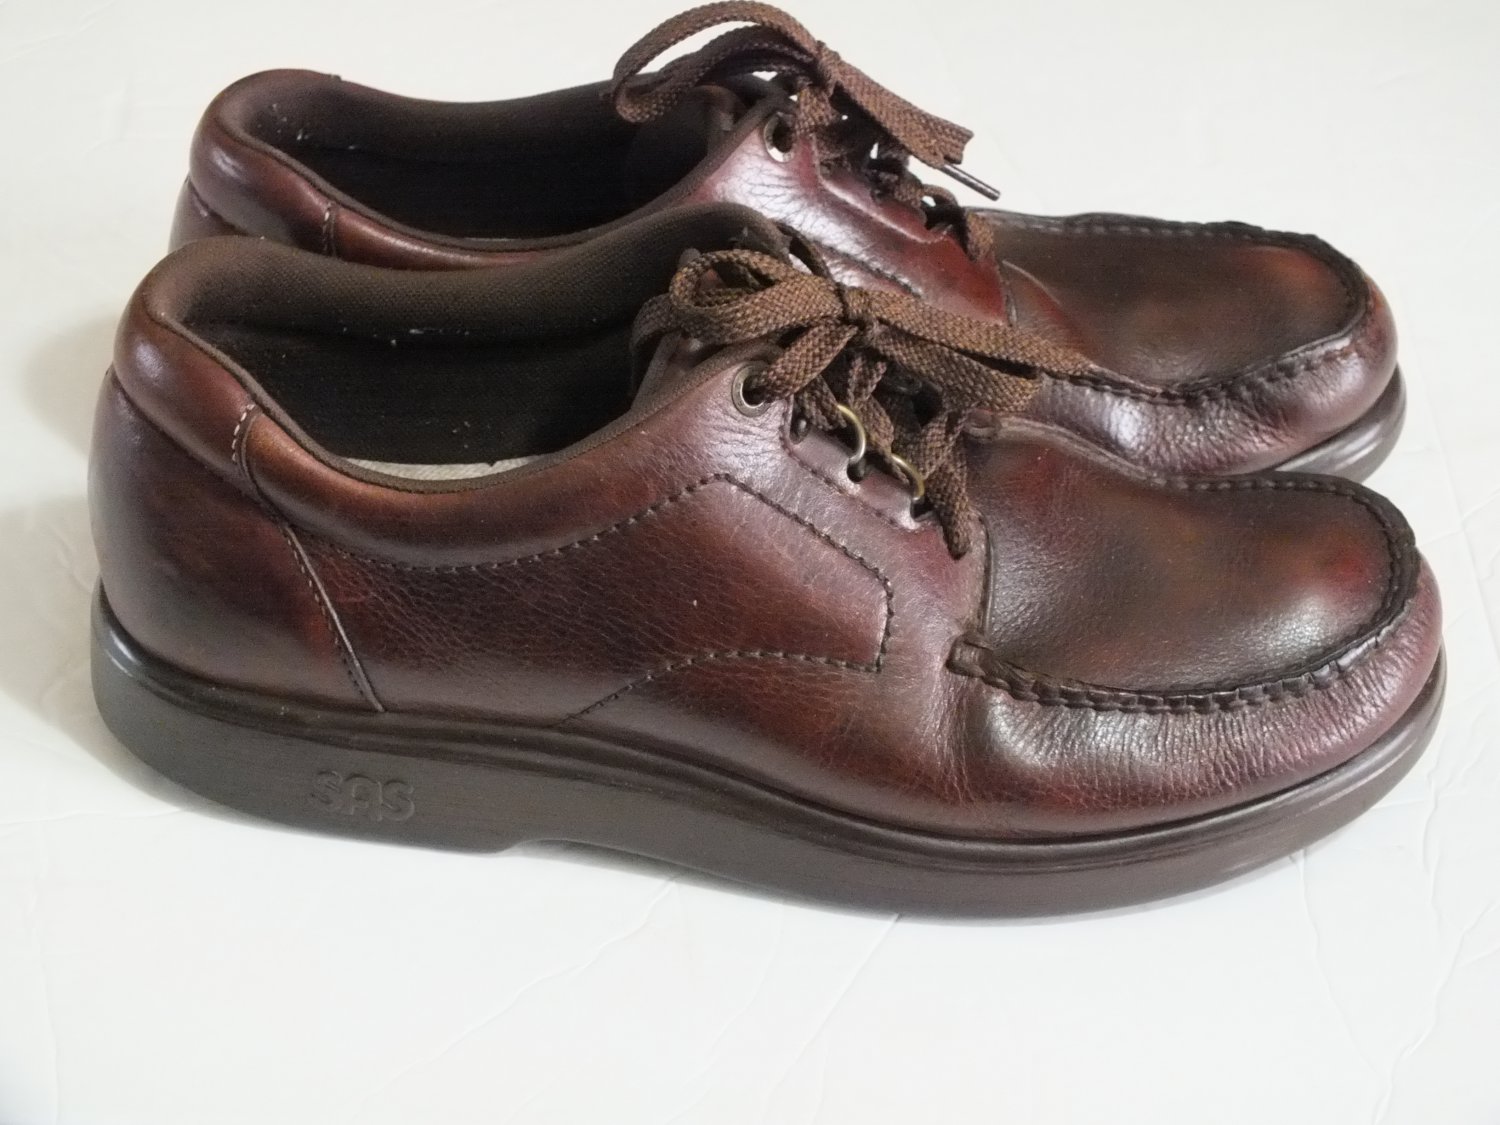 SAS Tripad Comfort soft step oxford men size 11.5 M brown leather